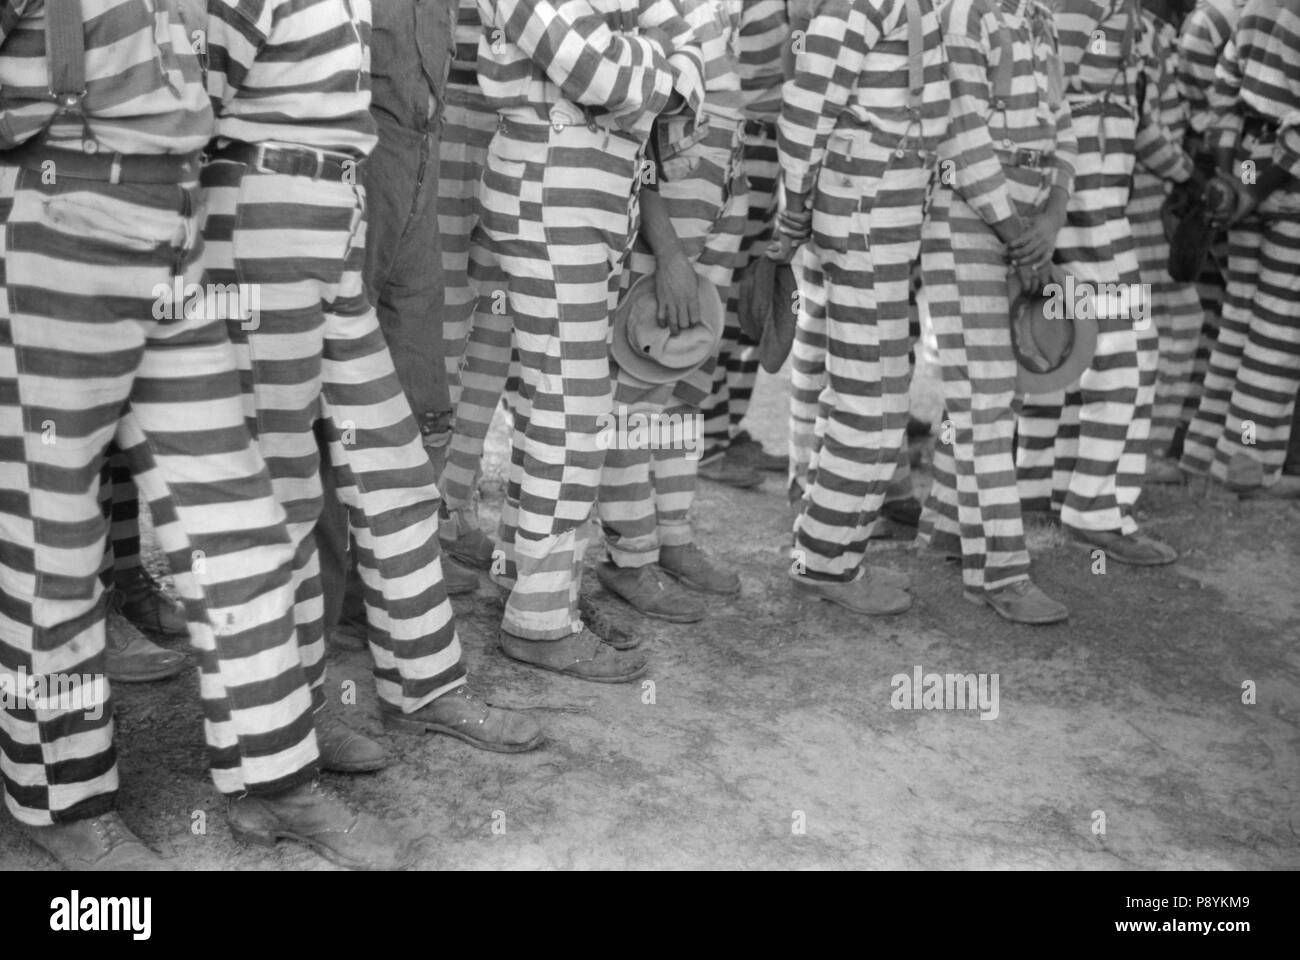 Convicts, Greene County Prison Camp, Greene County, Georgia, USA, Jack Delano, Farm Security Administration, May 1941 Stock Photo